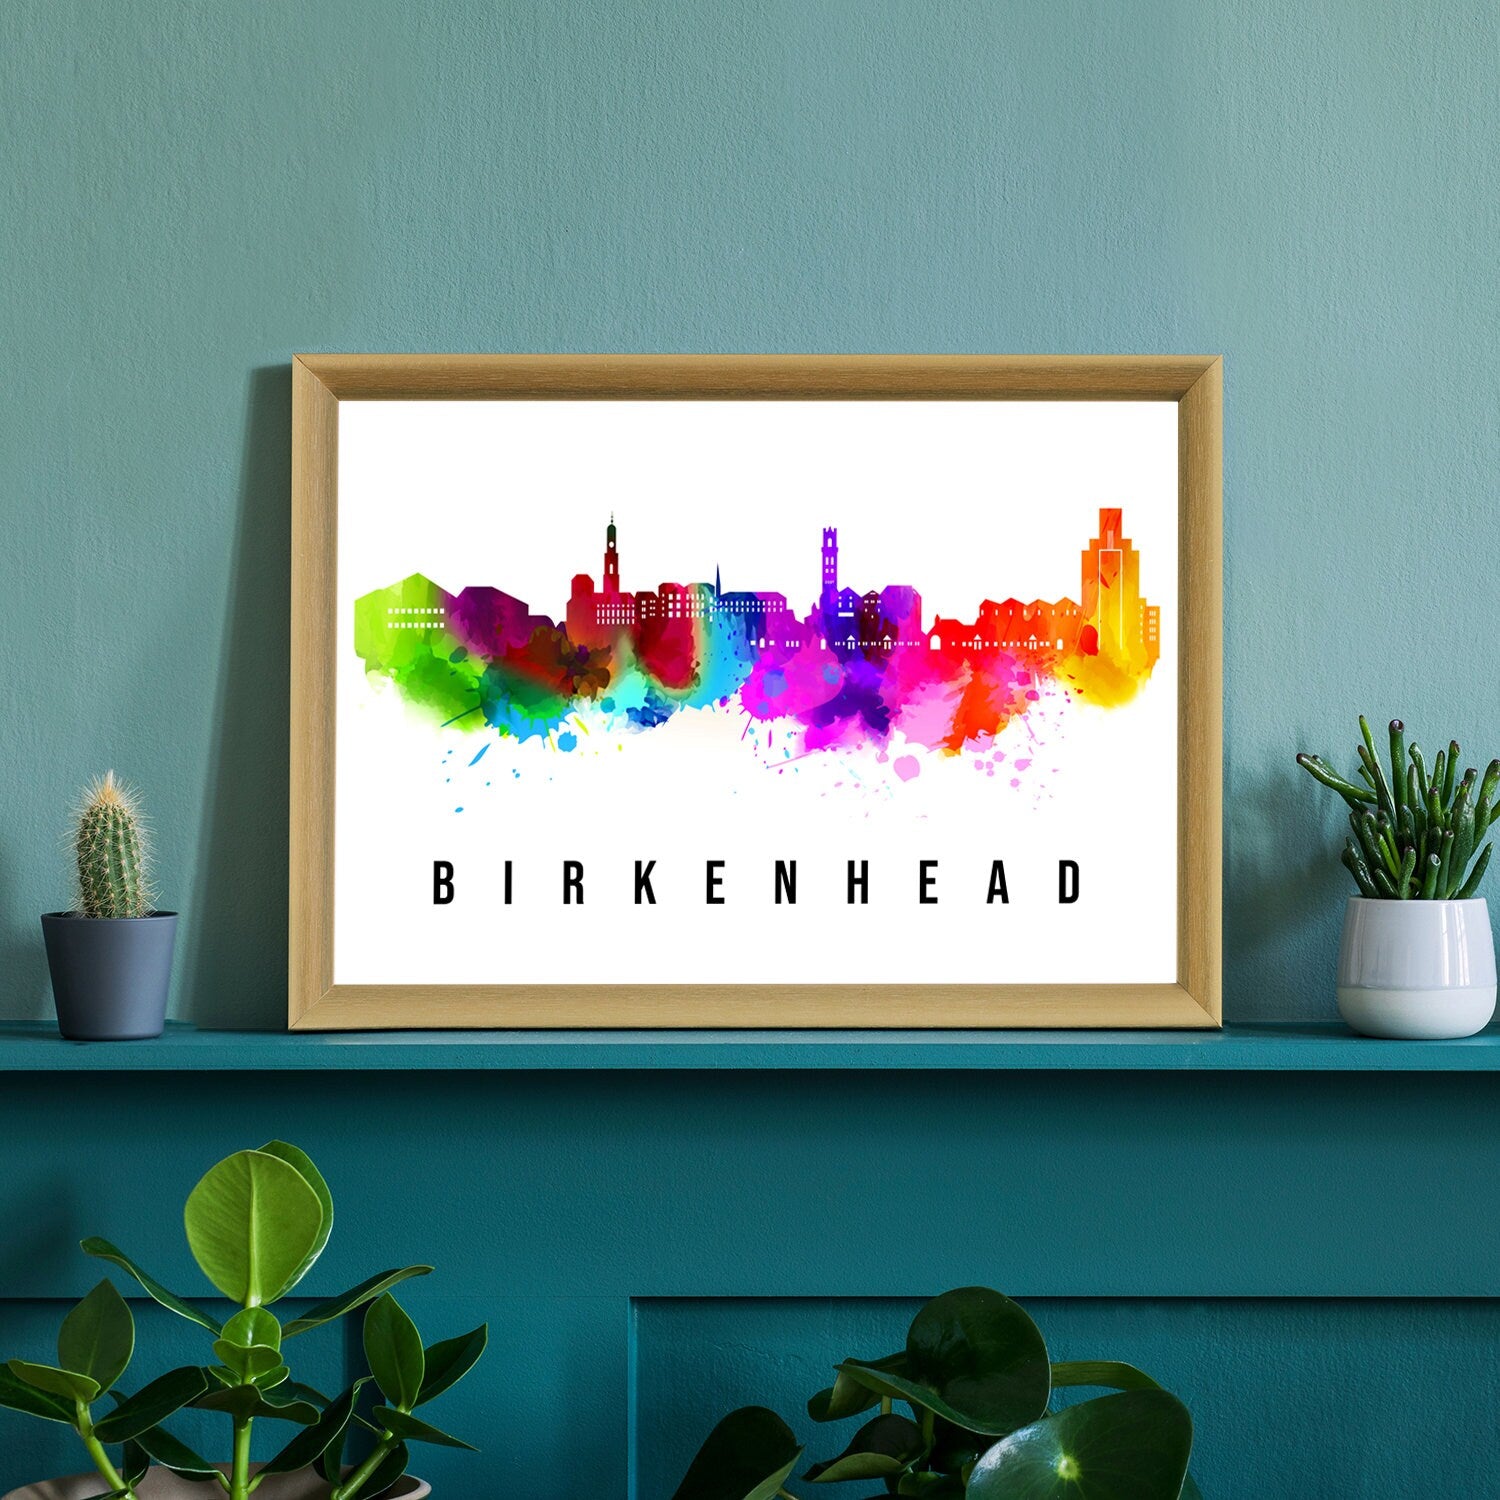 Birkenhead England Poster, Skyline poster cityscape poster, Landmark City Illustration poster, Home wall decoration, Office wall art